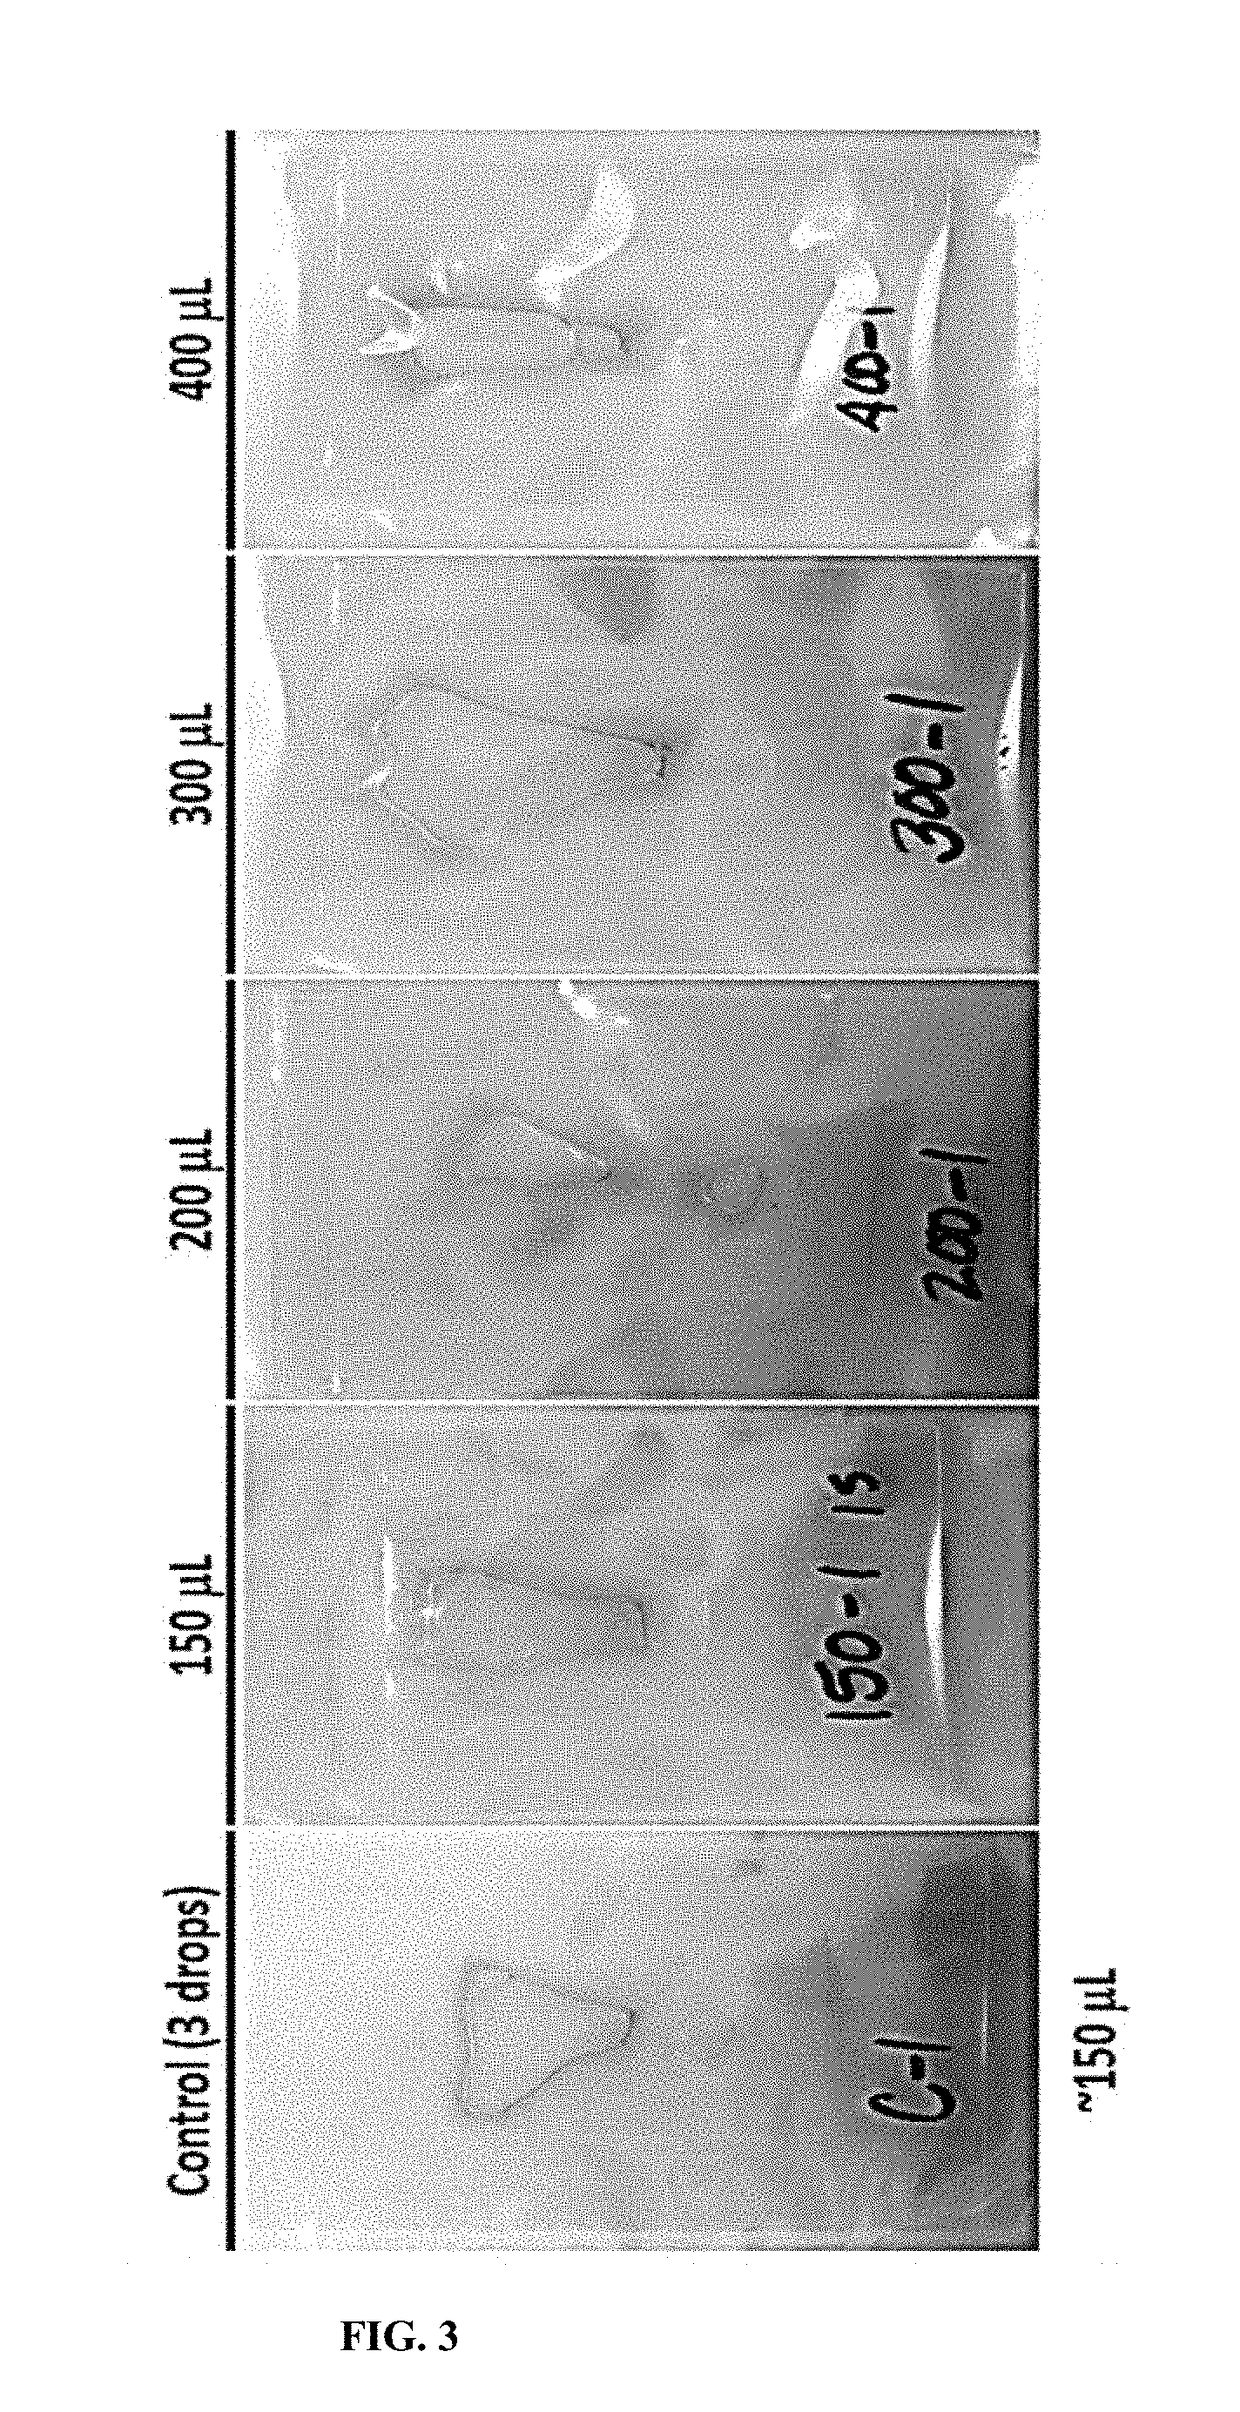 Method for preparing mammalian tissue for storage, implant, and transplant